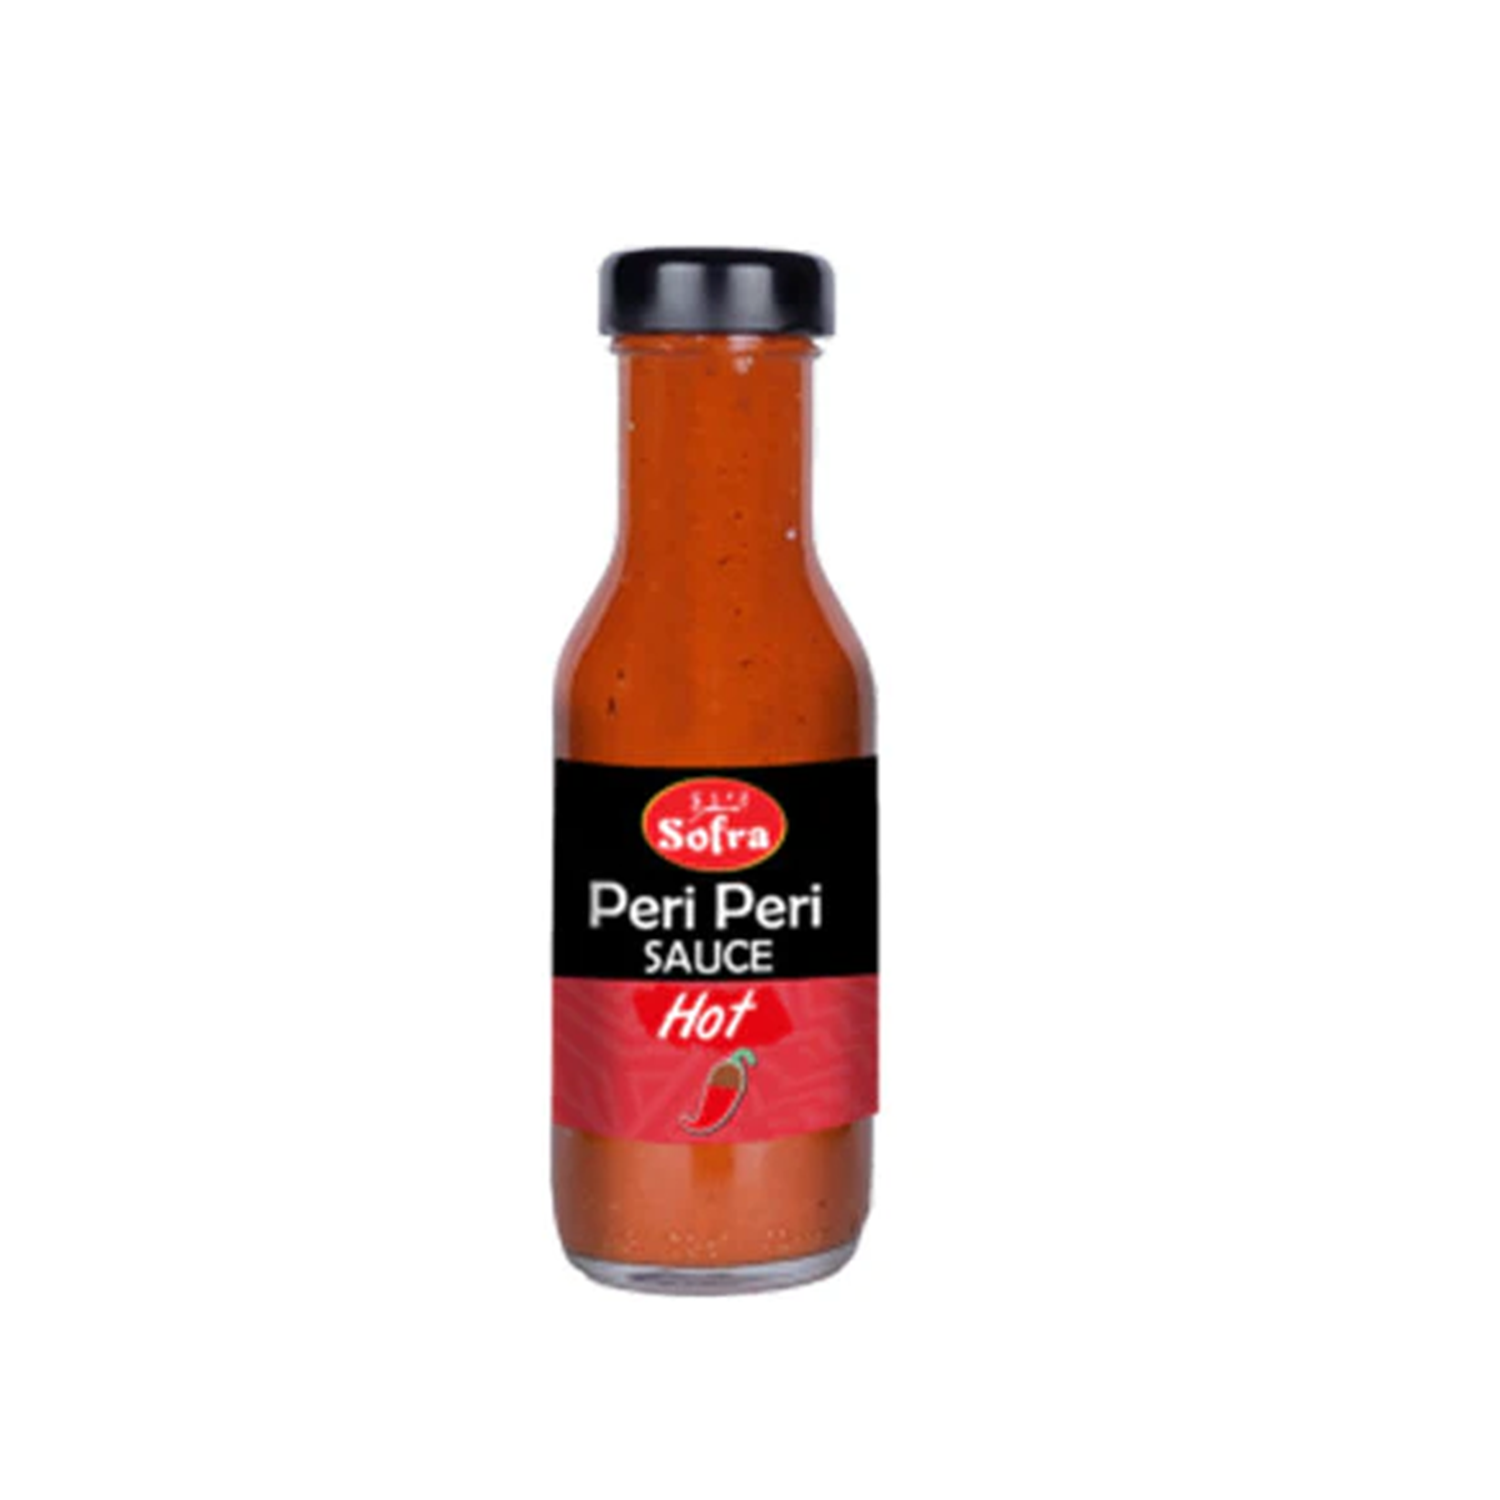 Sofra Peri Peri Sauce Hot 250ml